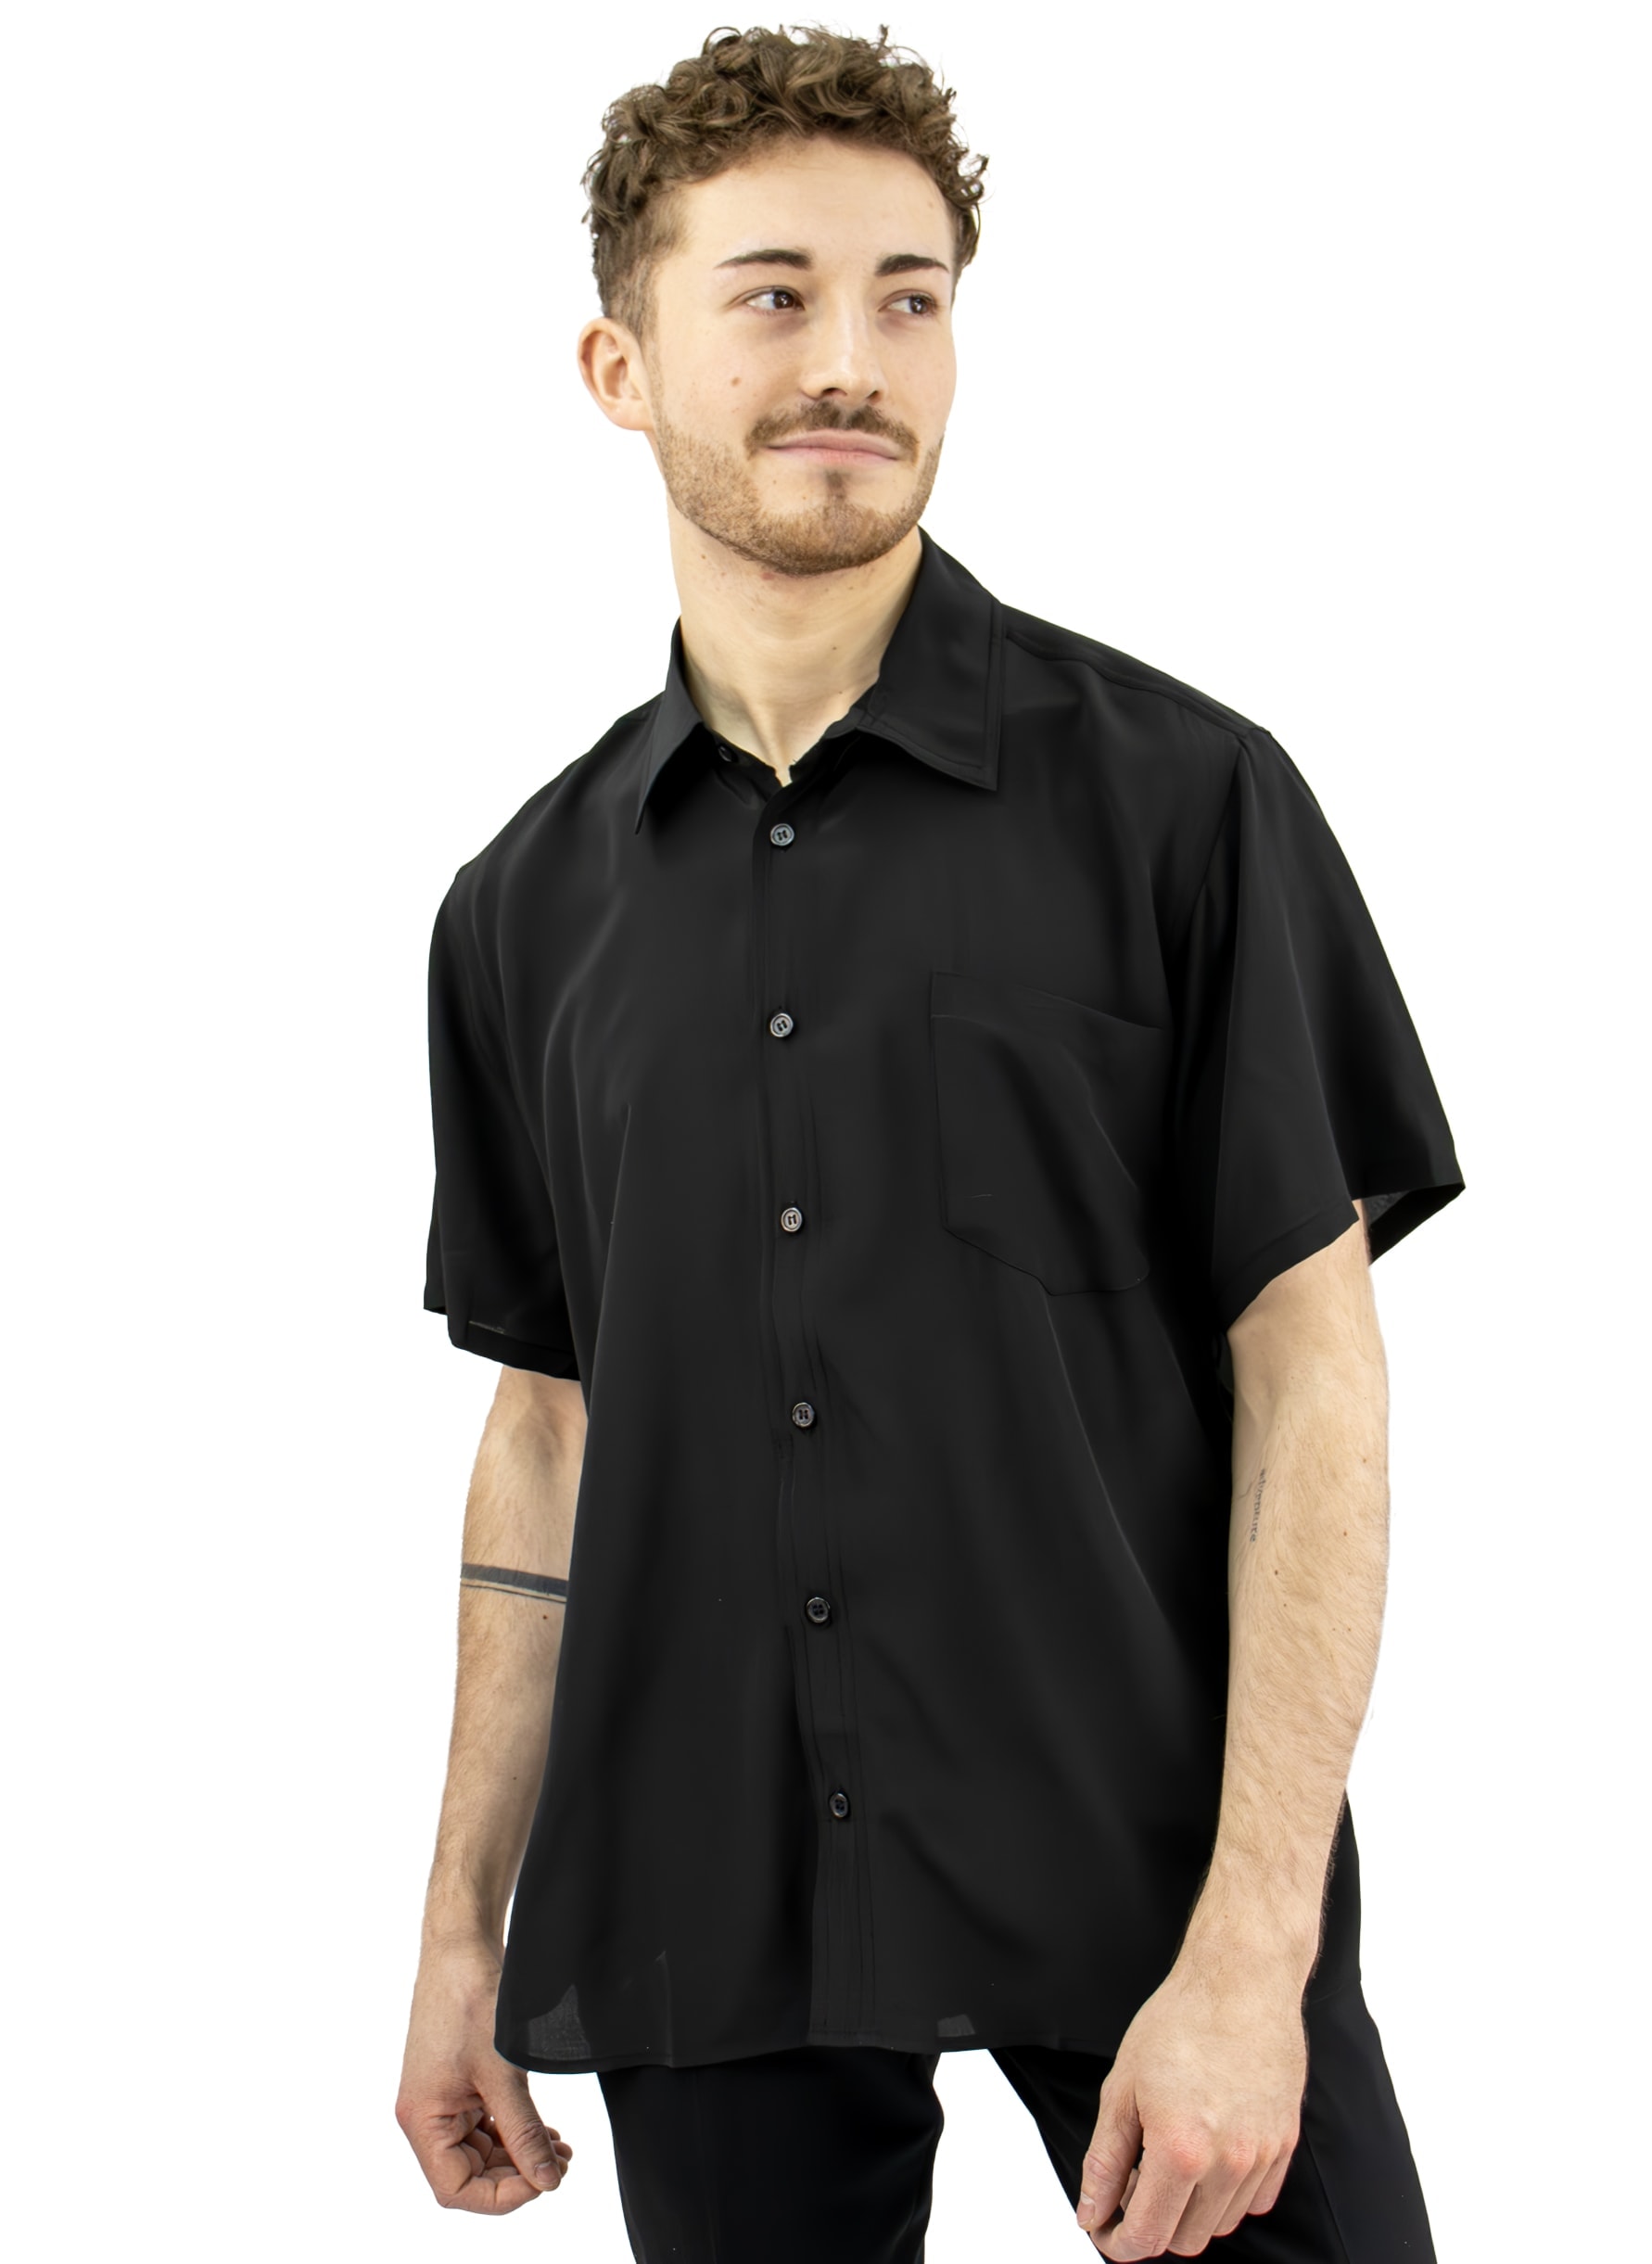 Men's Silk Shirt, Short Sleeve, Black